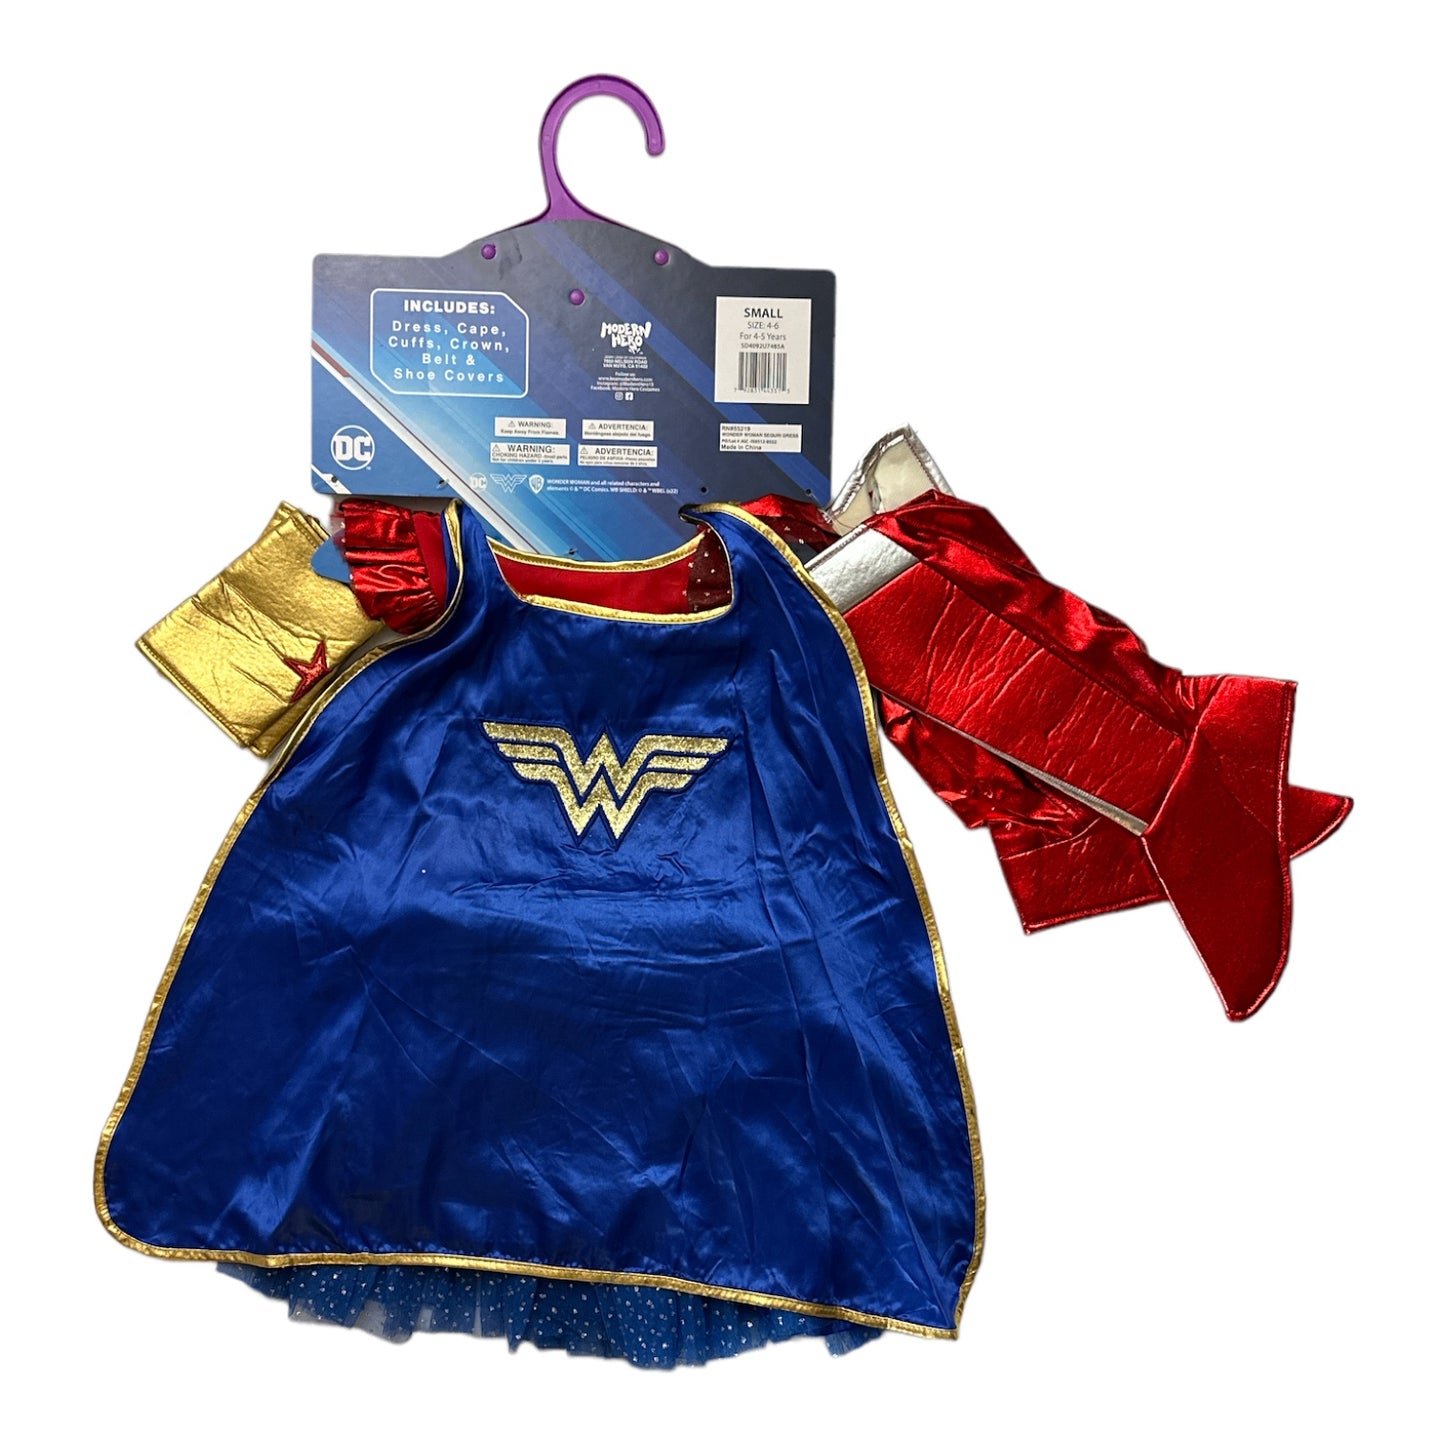 DC Wonder Woman Girls' Dress, Cape, Crown, Belt & Shoe Covers Halloween Costume